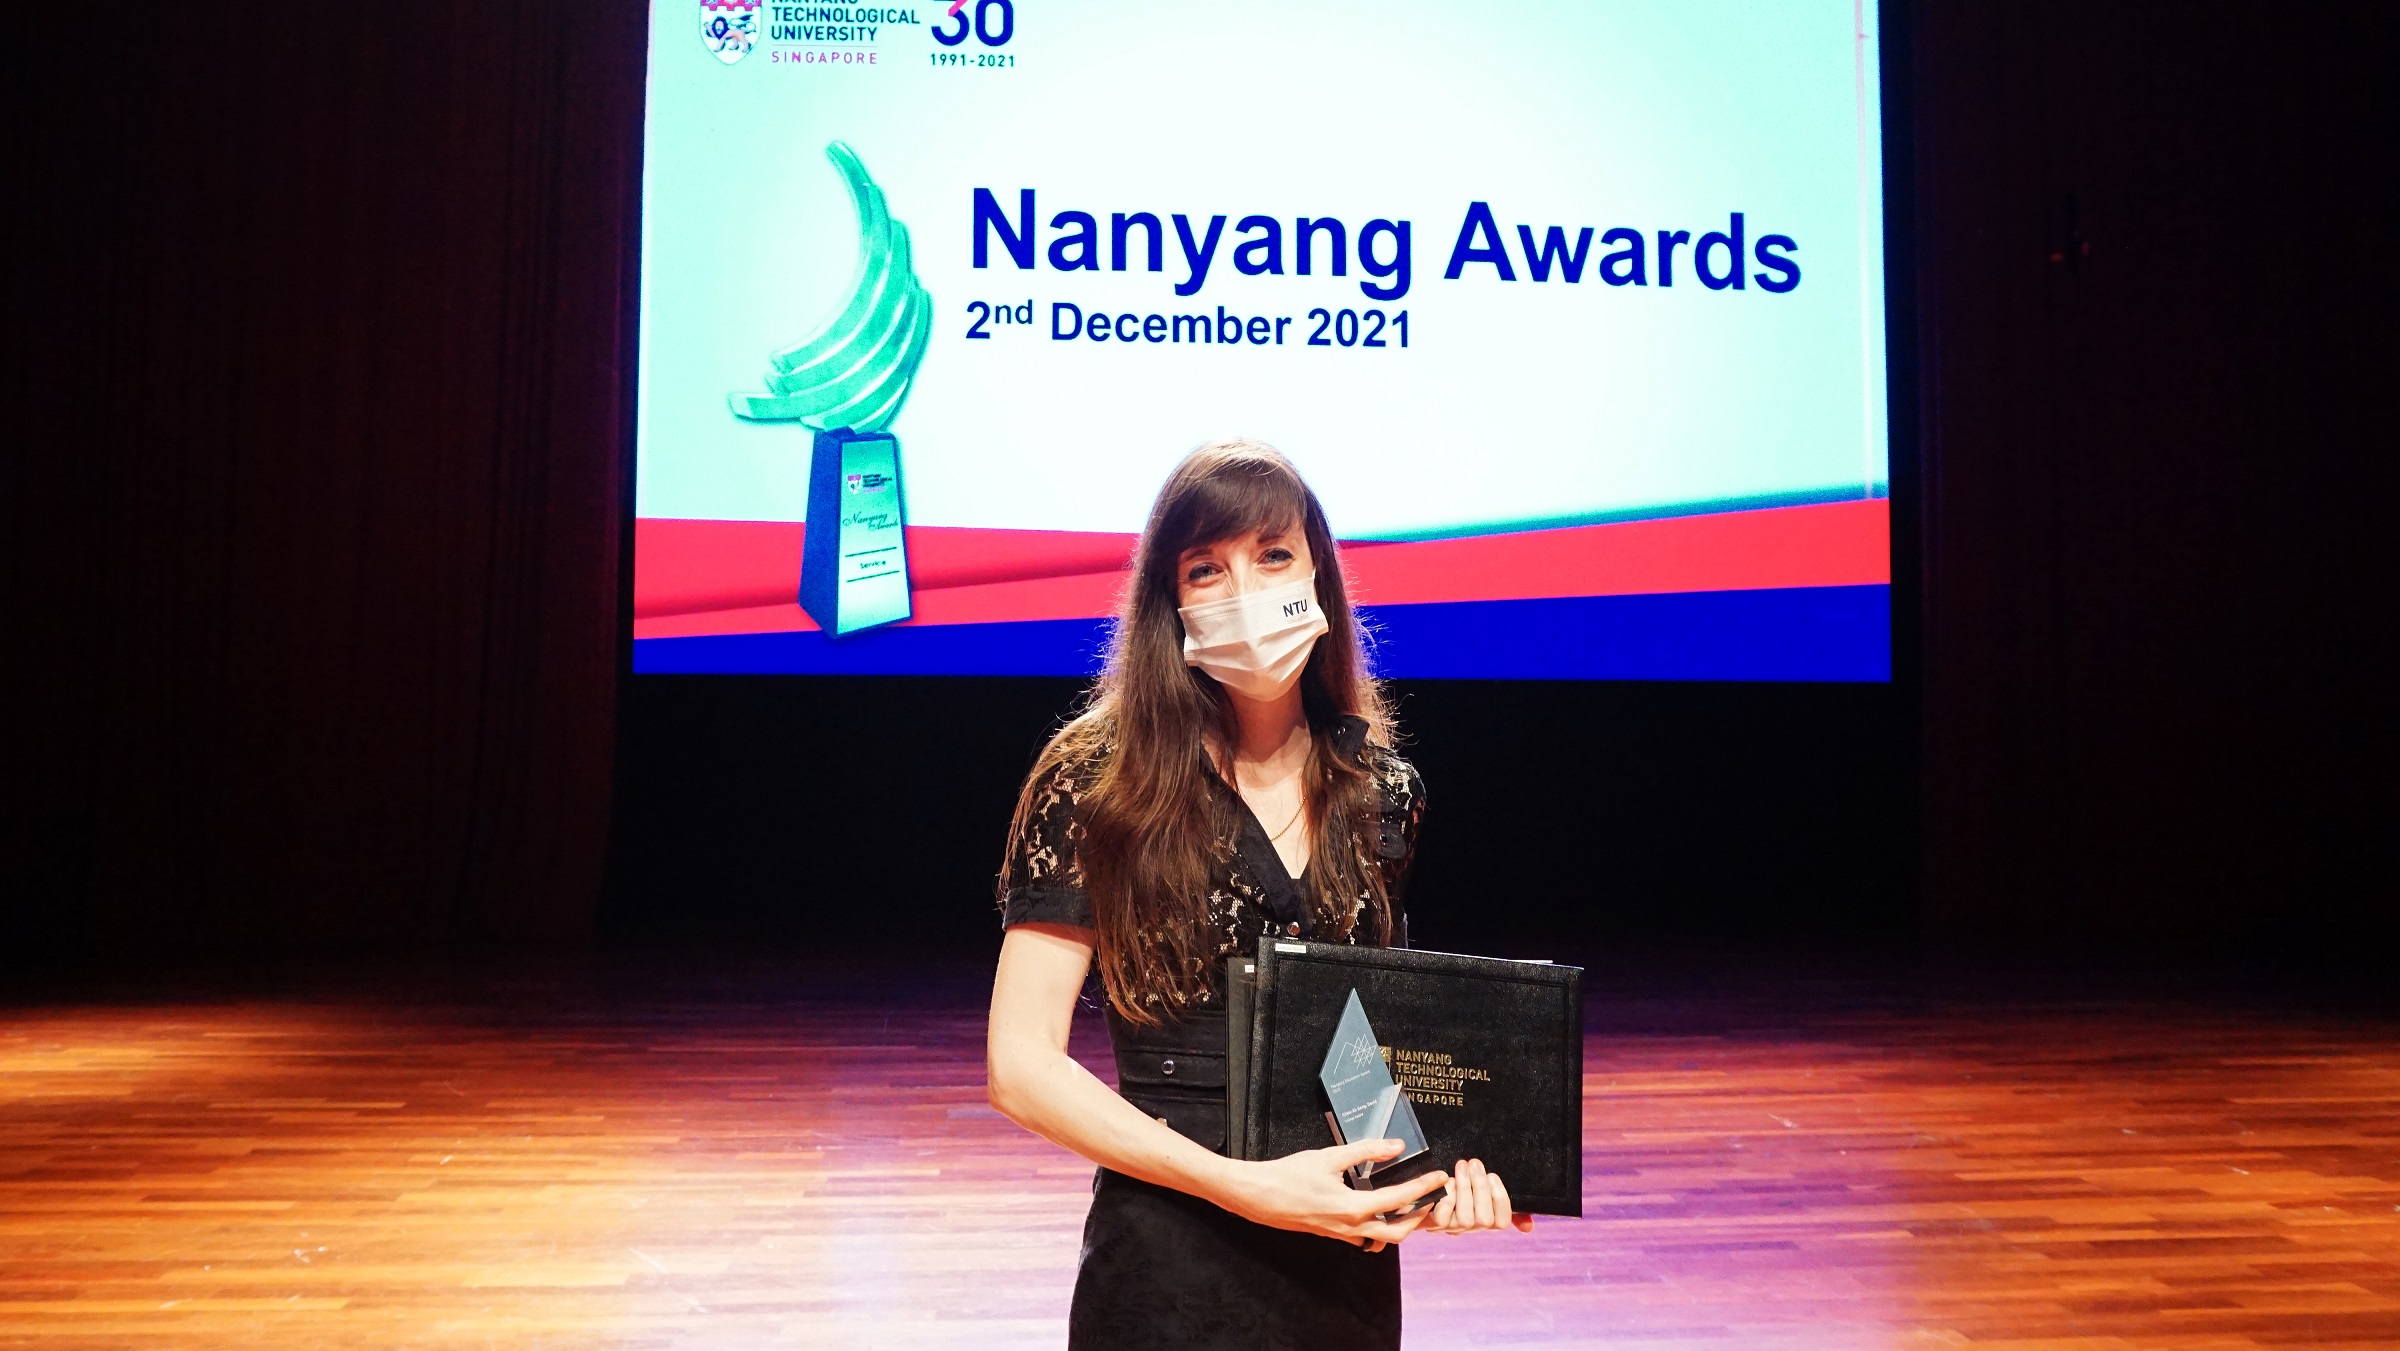 LKCMedicine's Outstanding achievements at Nanyang Awards 2021